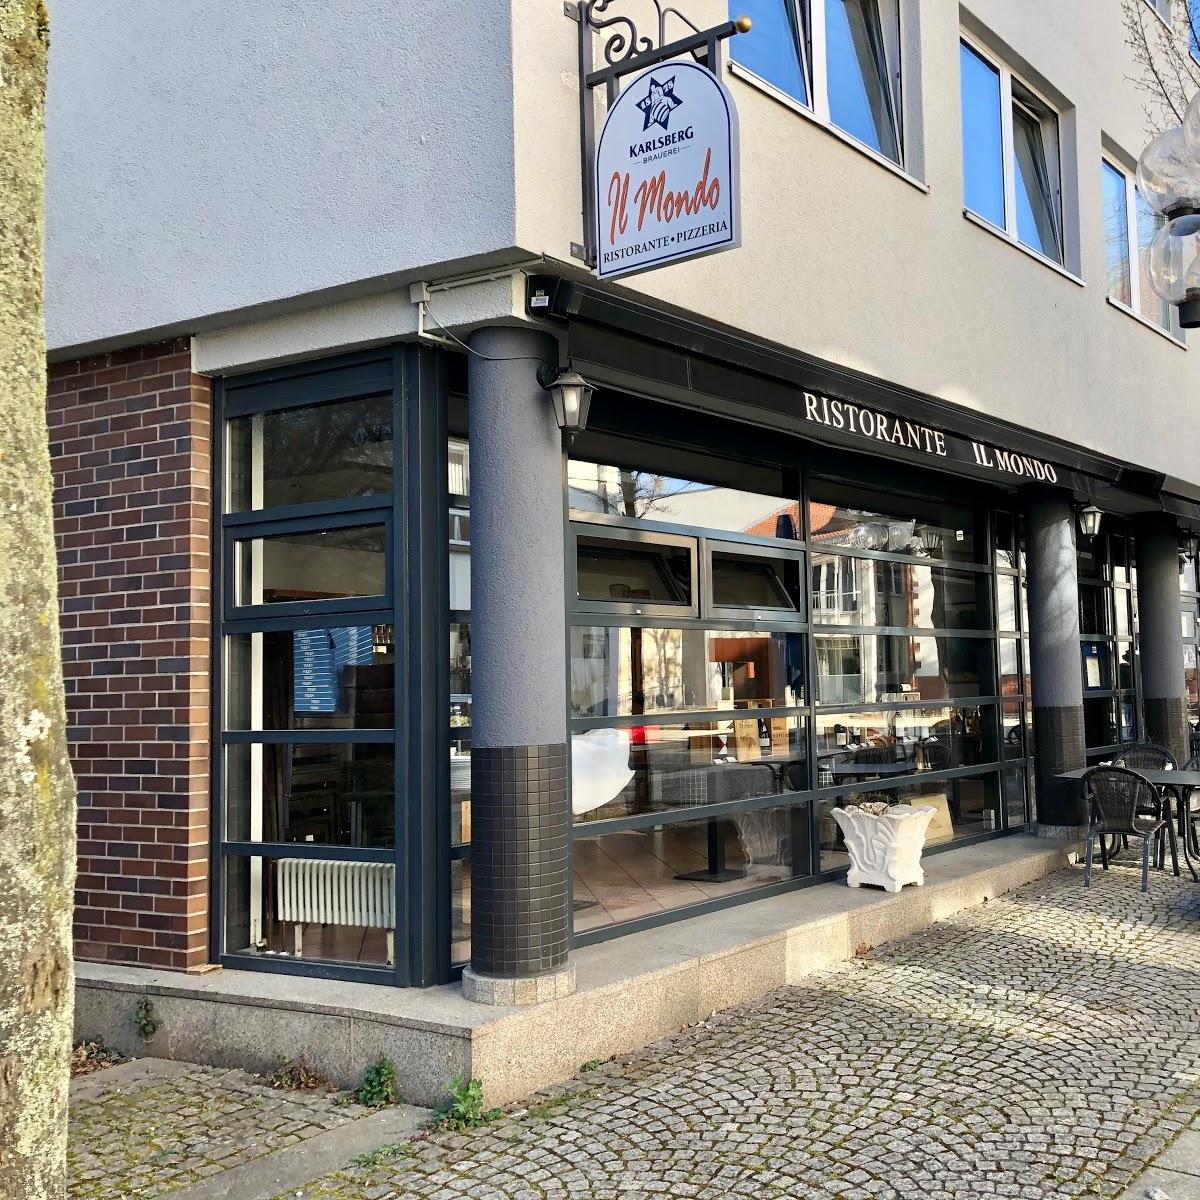 Restaurant "Mondo Divino" in Kaiserslautern